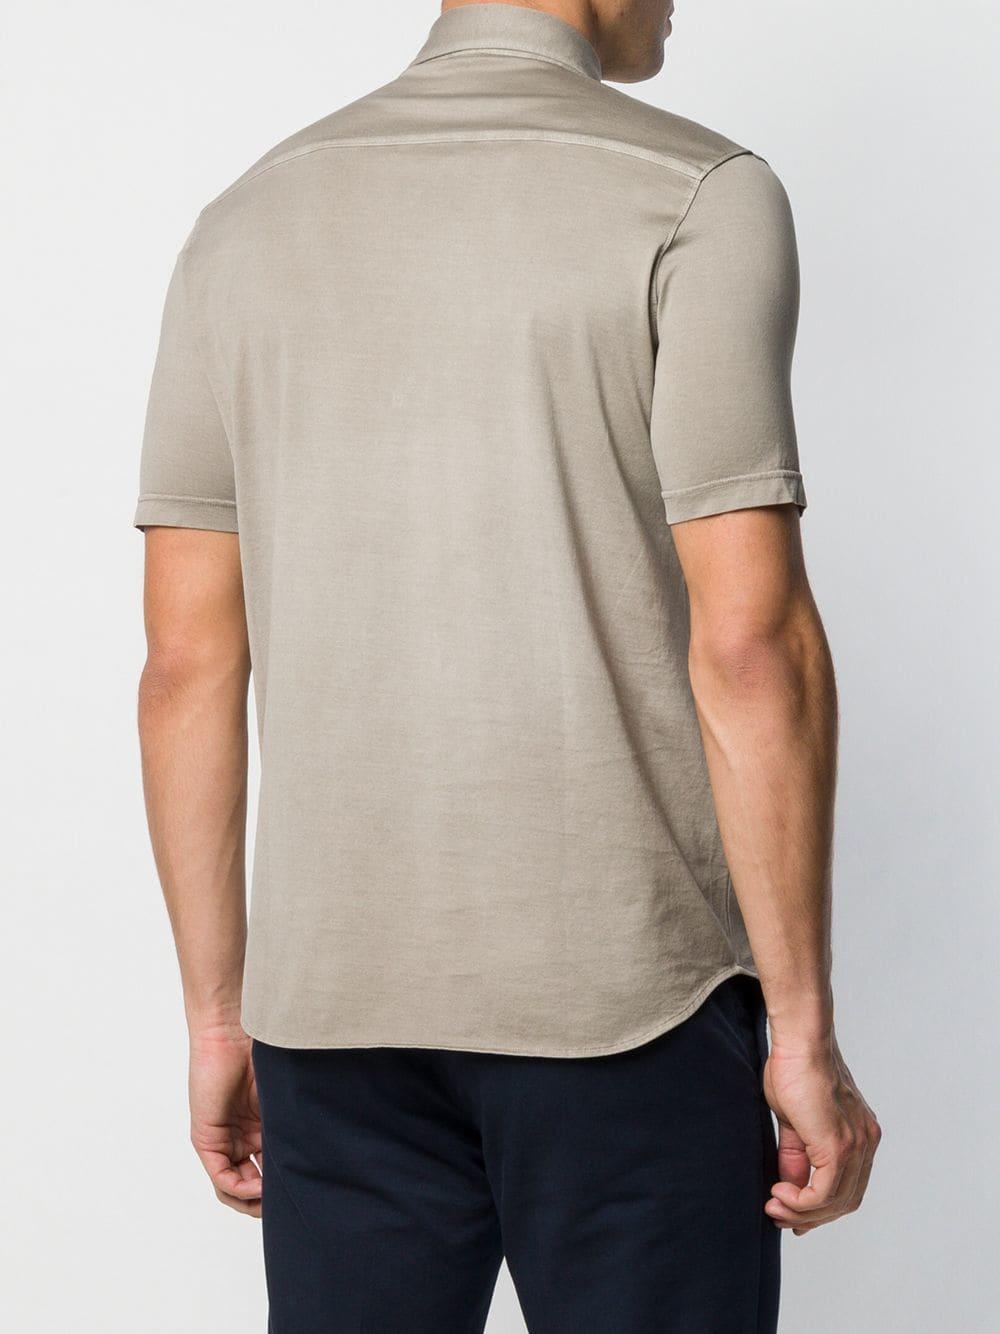 Dell'Oglio Slim Fit Polo Shirt in Grey (Gray) for Men - Lyst